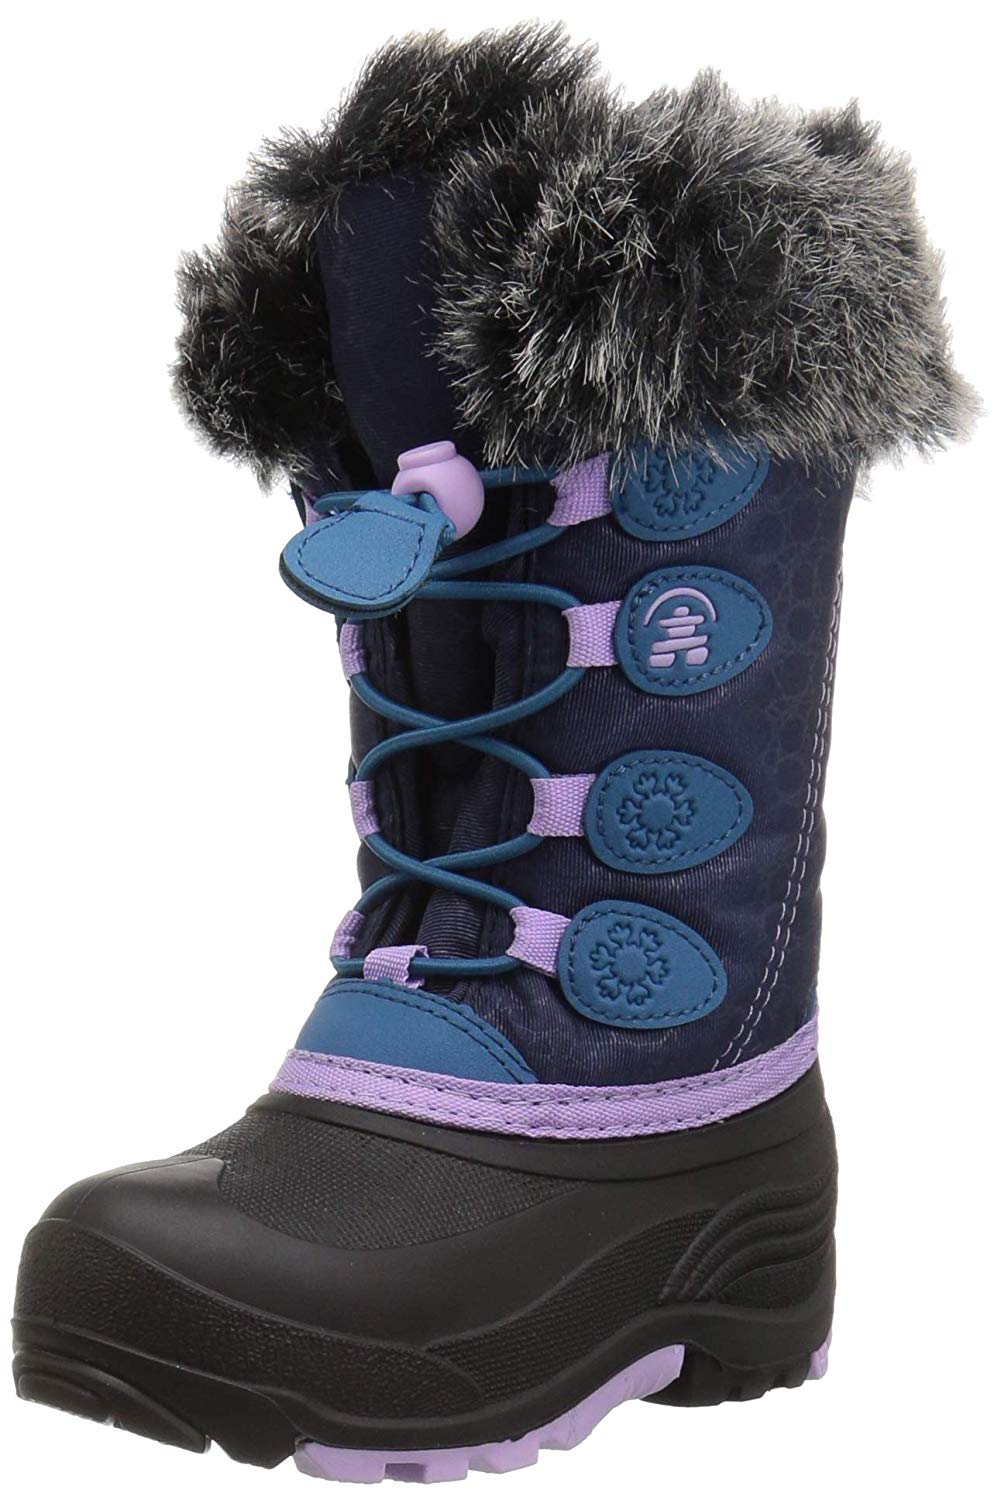 Kamik Kids' Snowgypsy Snow Boot,, Navy/Teal, Size 9.0 ivXy | eBay